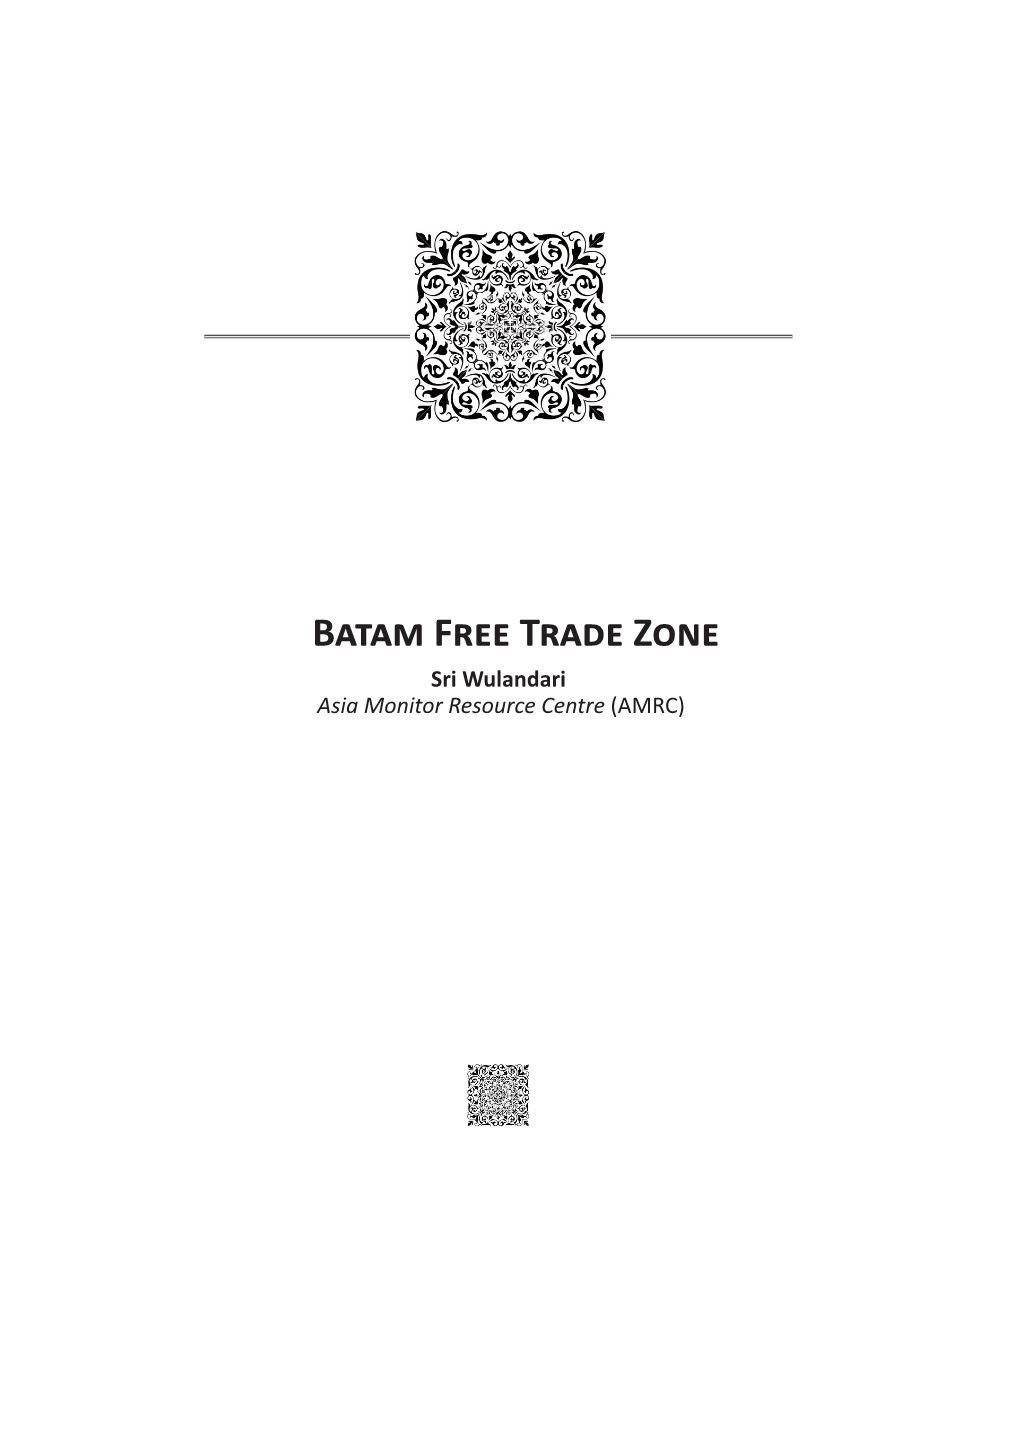 Batam Free Trade Zone Singapore-Indonesia: Surplus Wealth Spilling Over to Neighbours Through 4 the Concept of Cross Border Regional Development